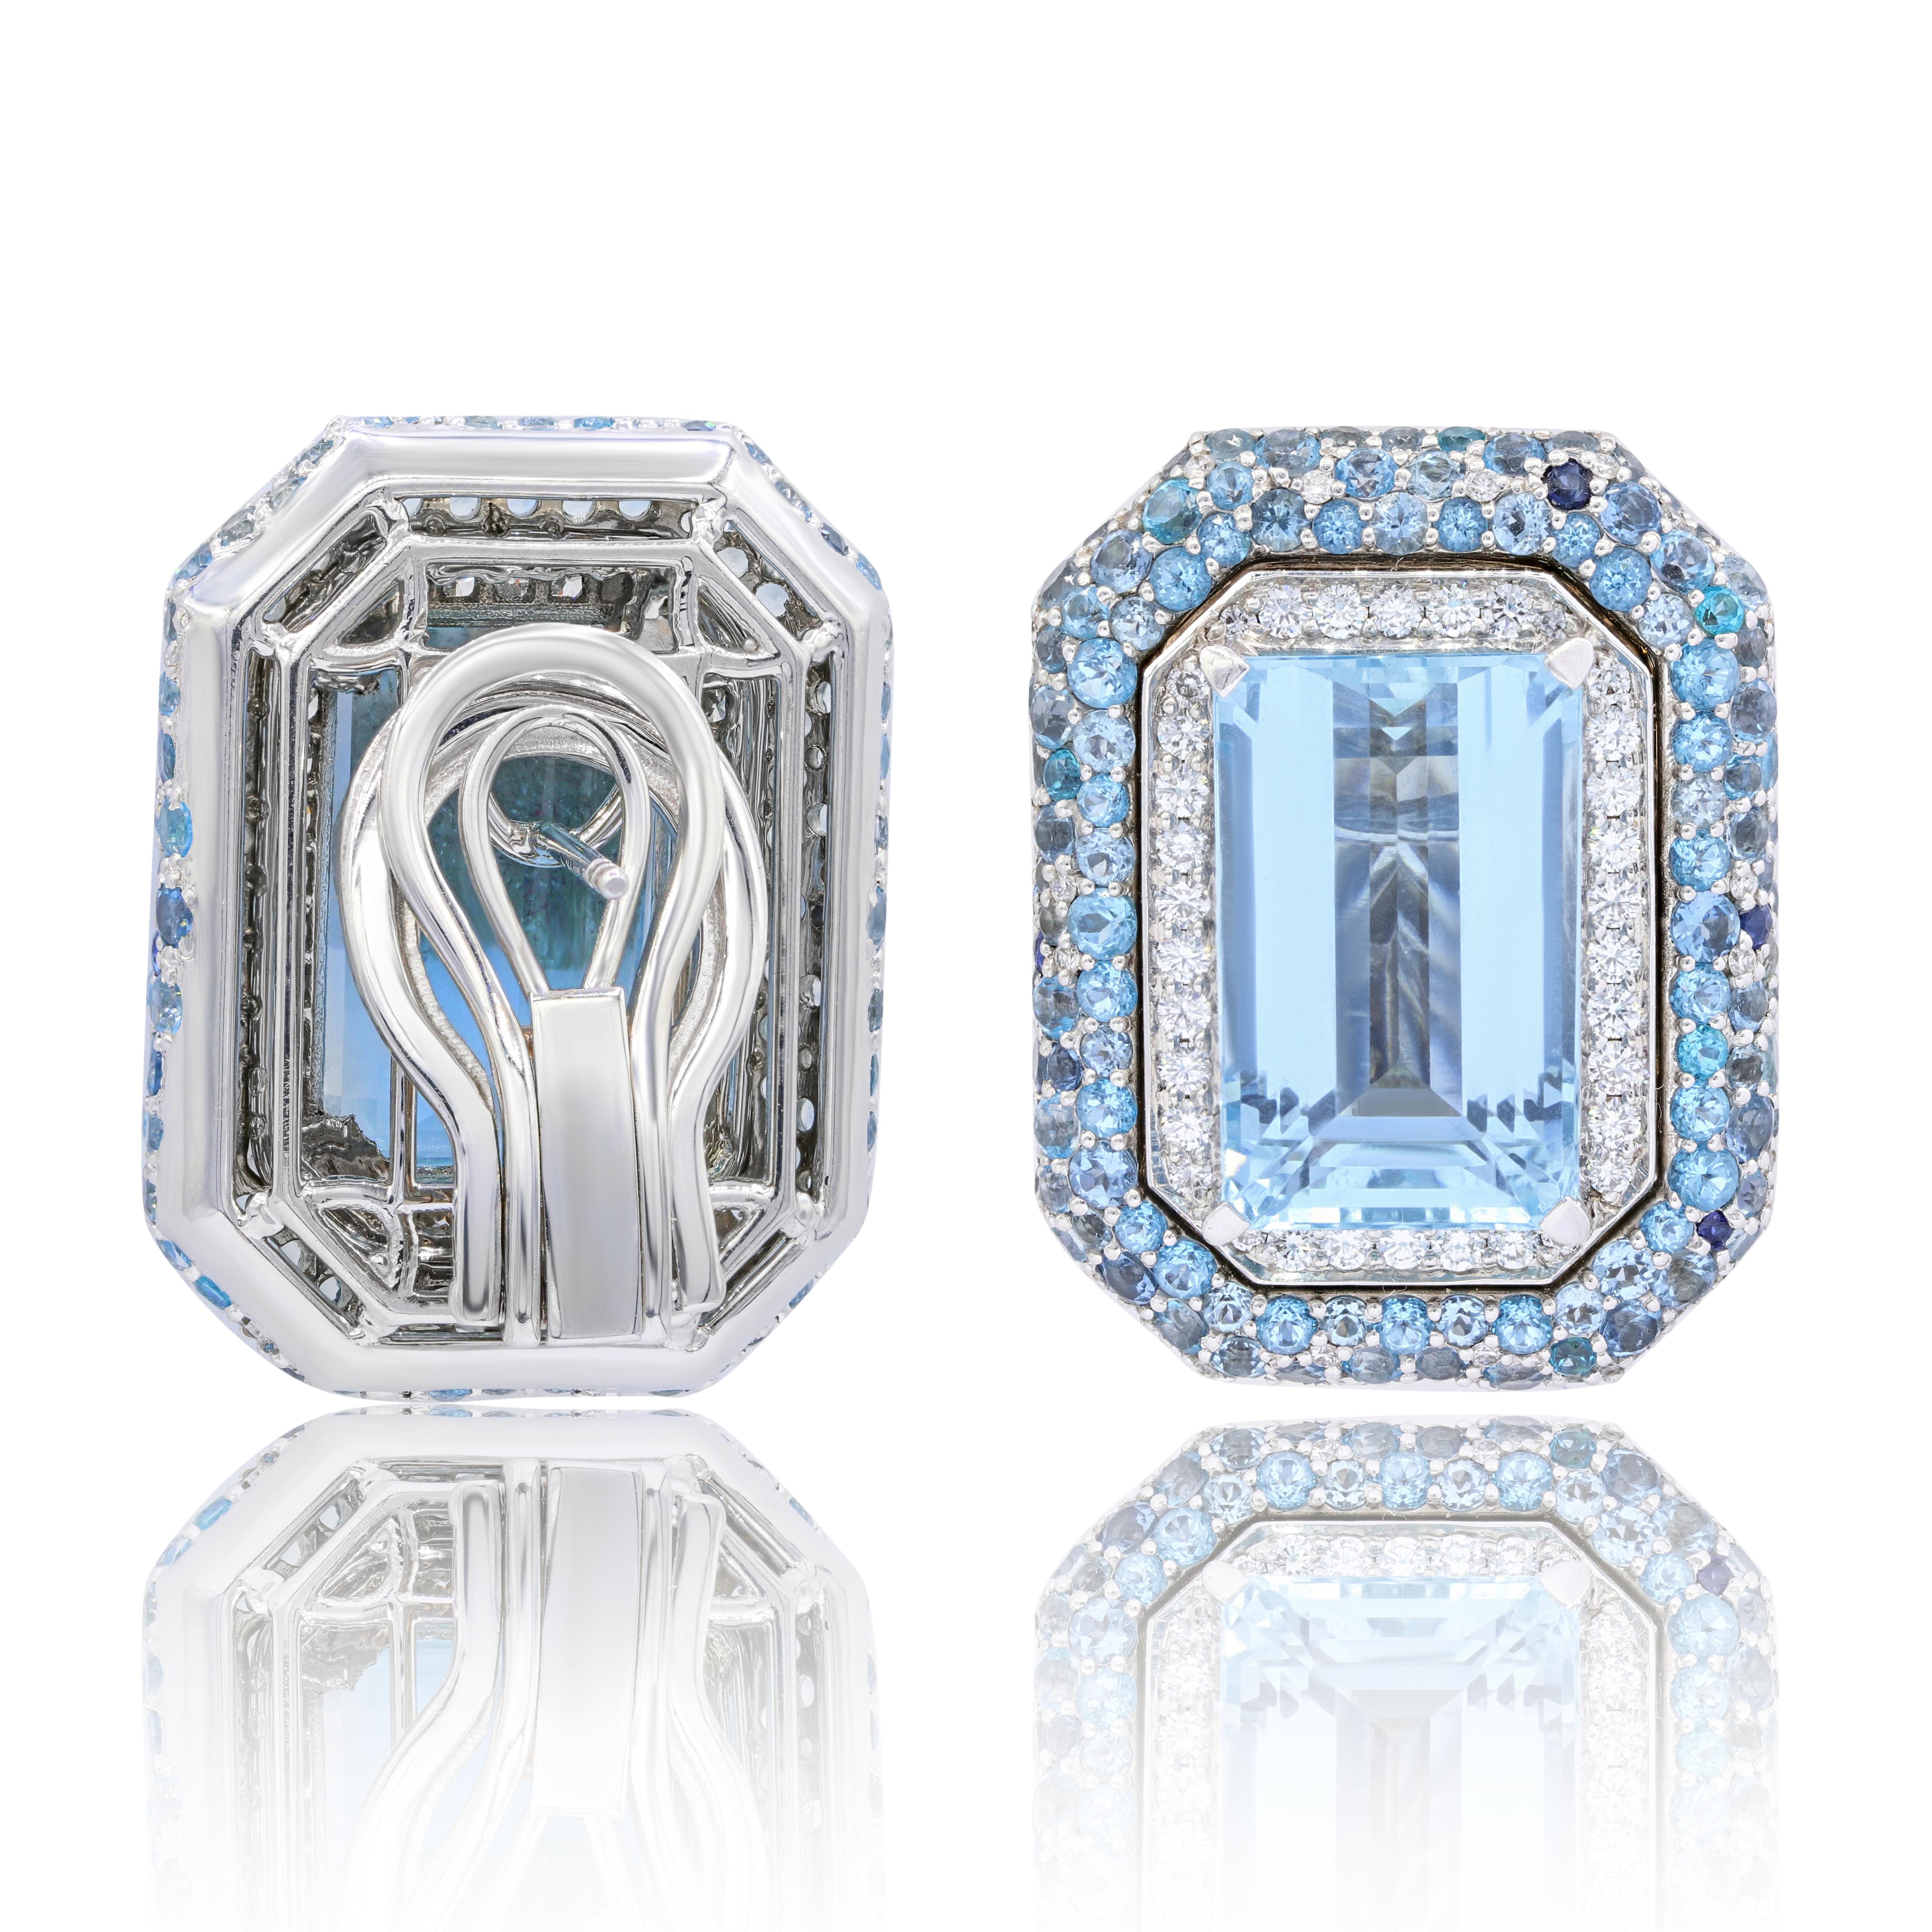 14KT White gold aquamarine diamond earrings with center 25.00 ct aquamarine emerald shape set in diamond setting features 2.00 ct  blue round diamonds